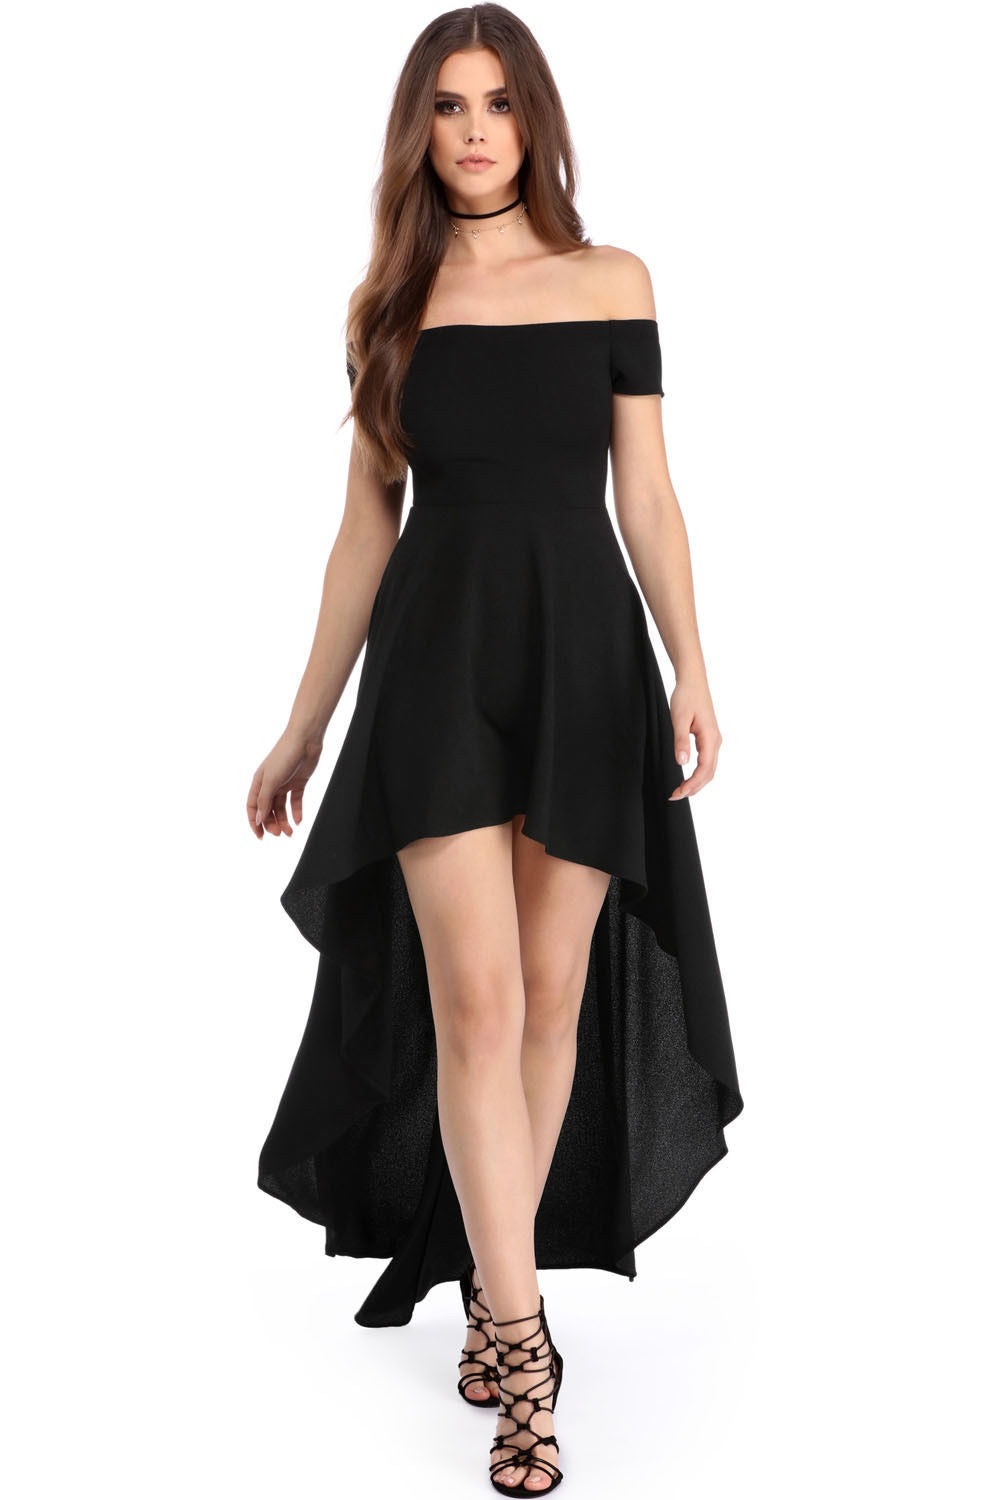 high low black cocktail dress